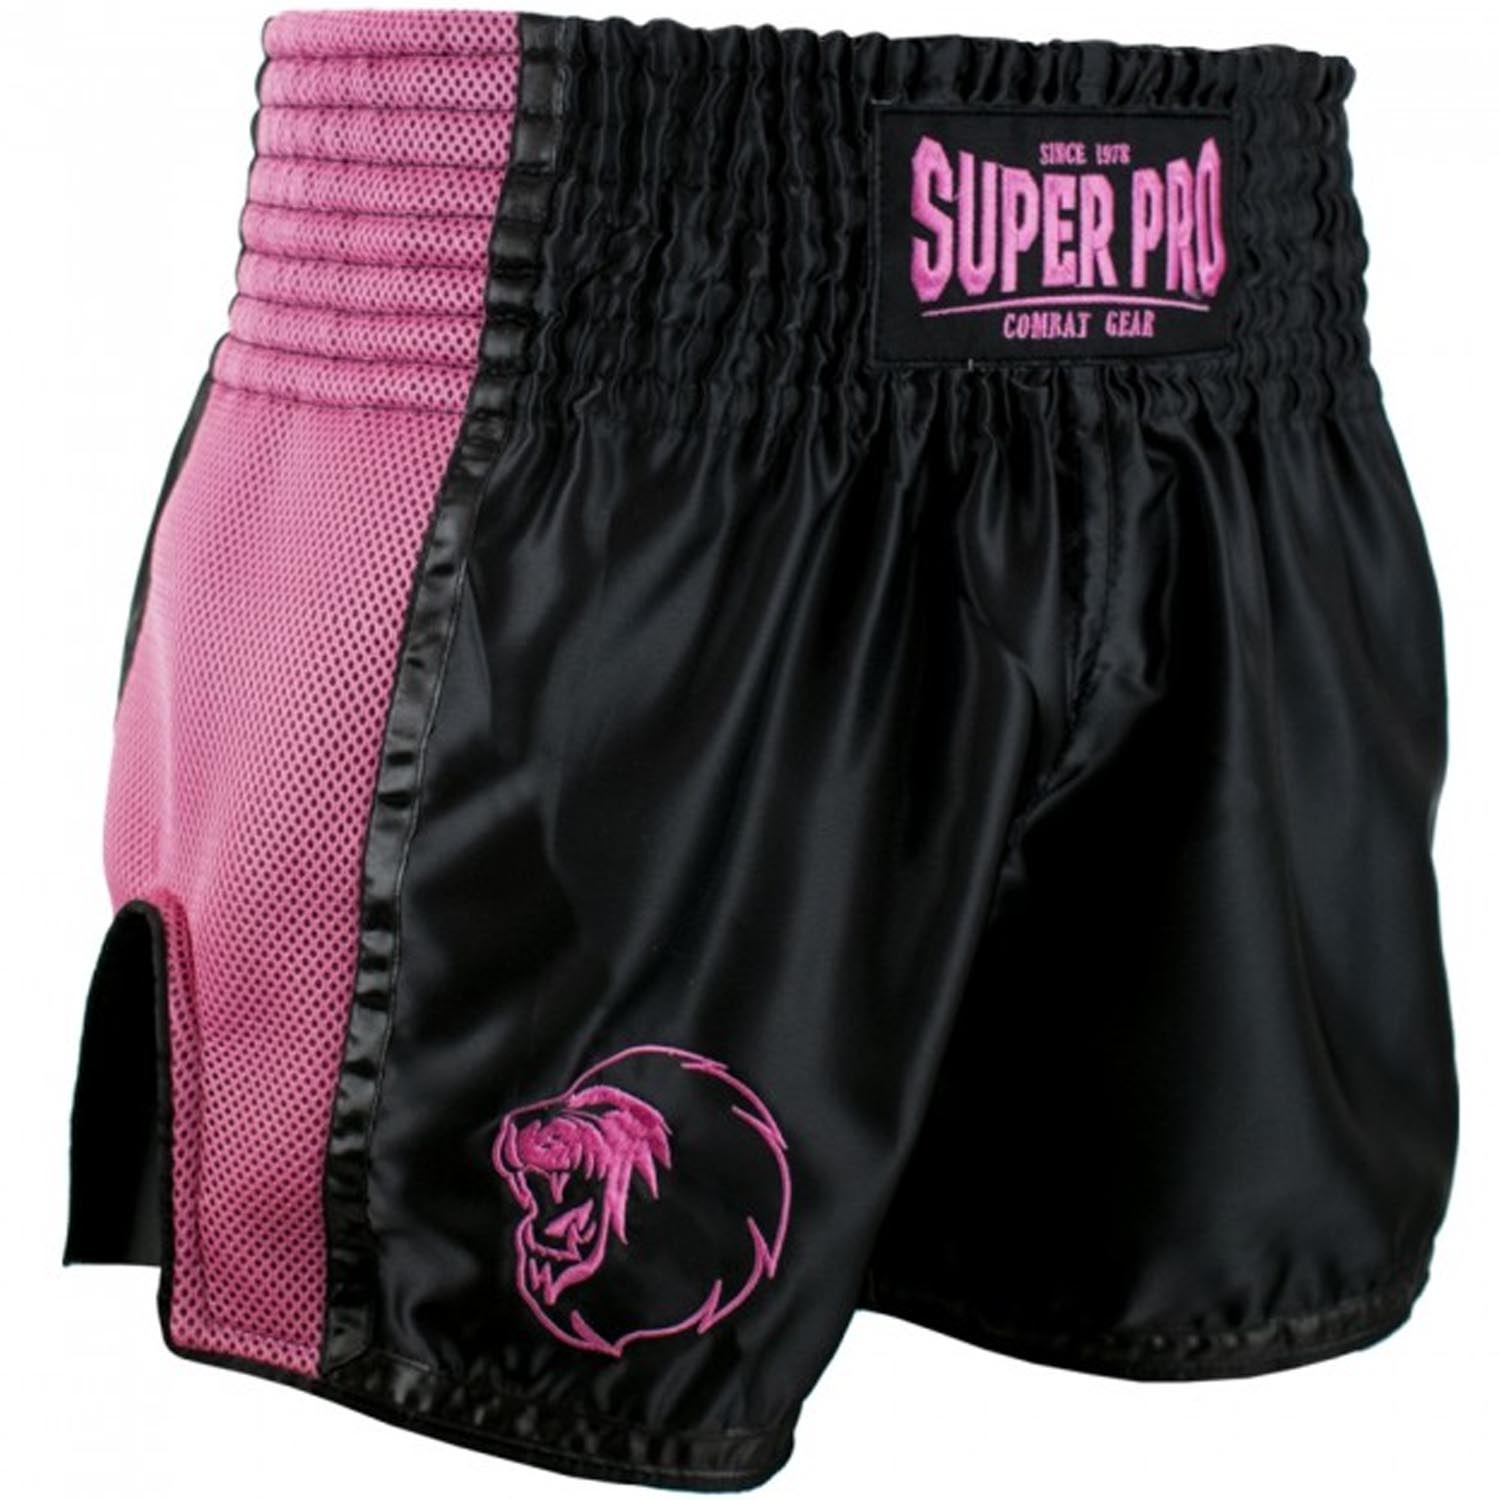 Super Pro Muay Thai Shorts, Brave, schwarz-rosa